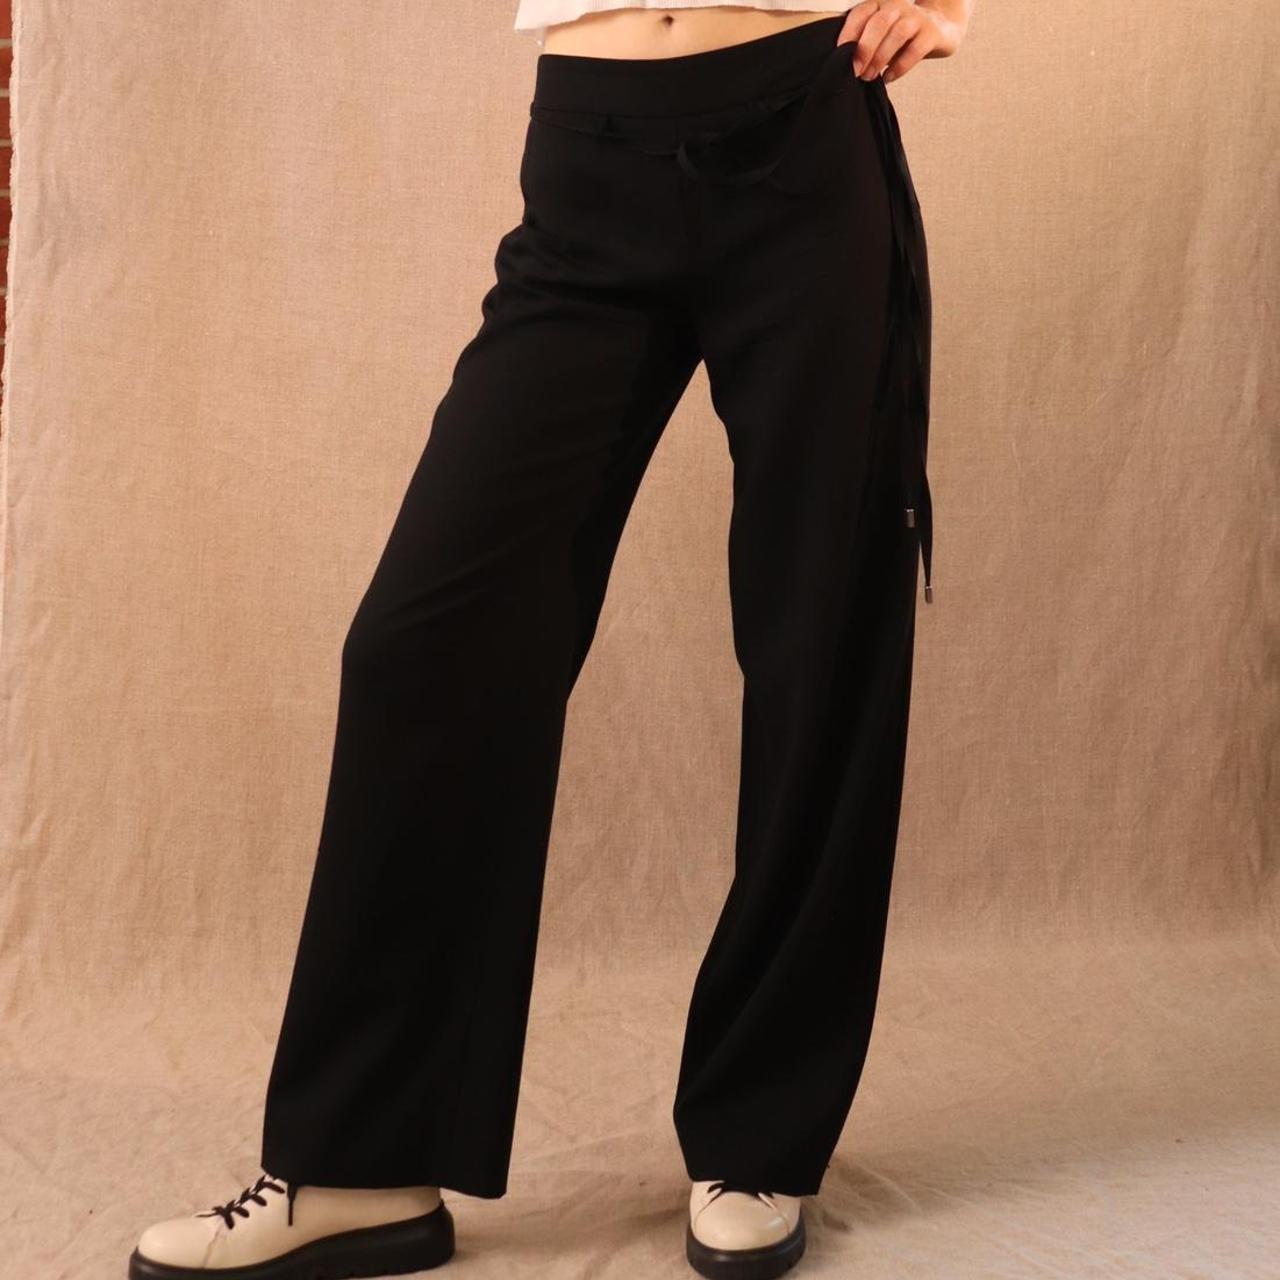 Armani Women's Black Trousers